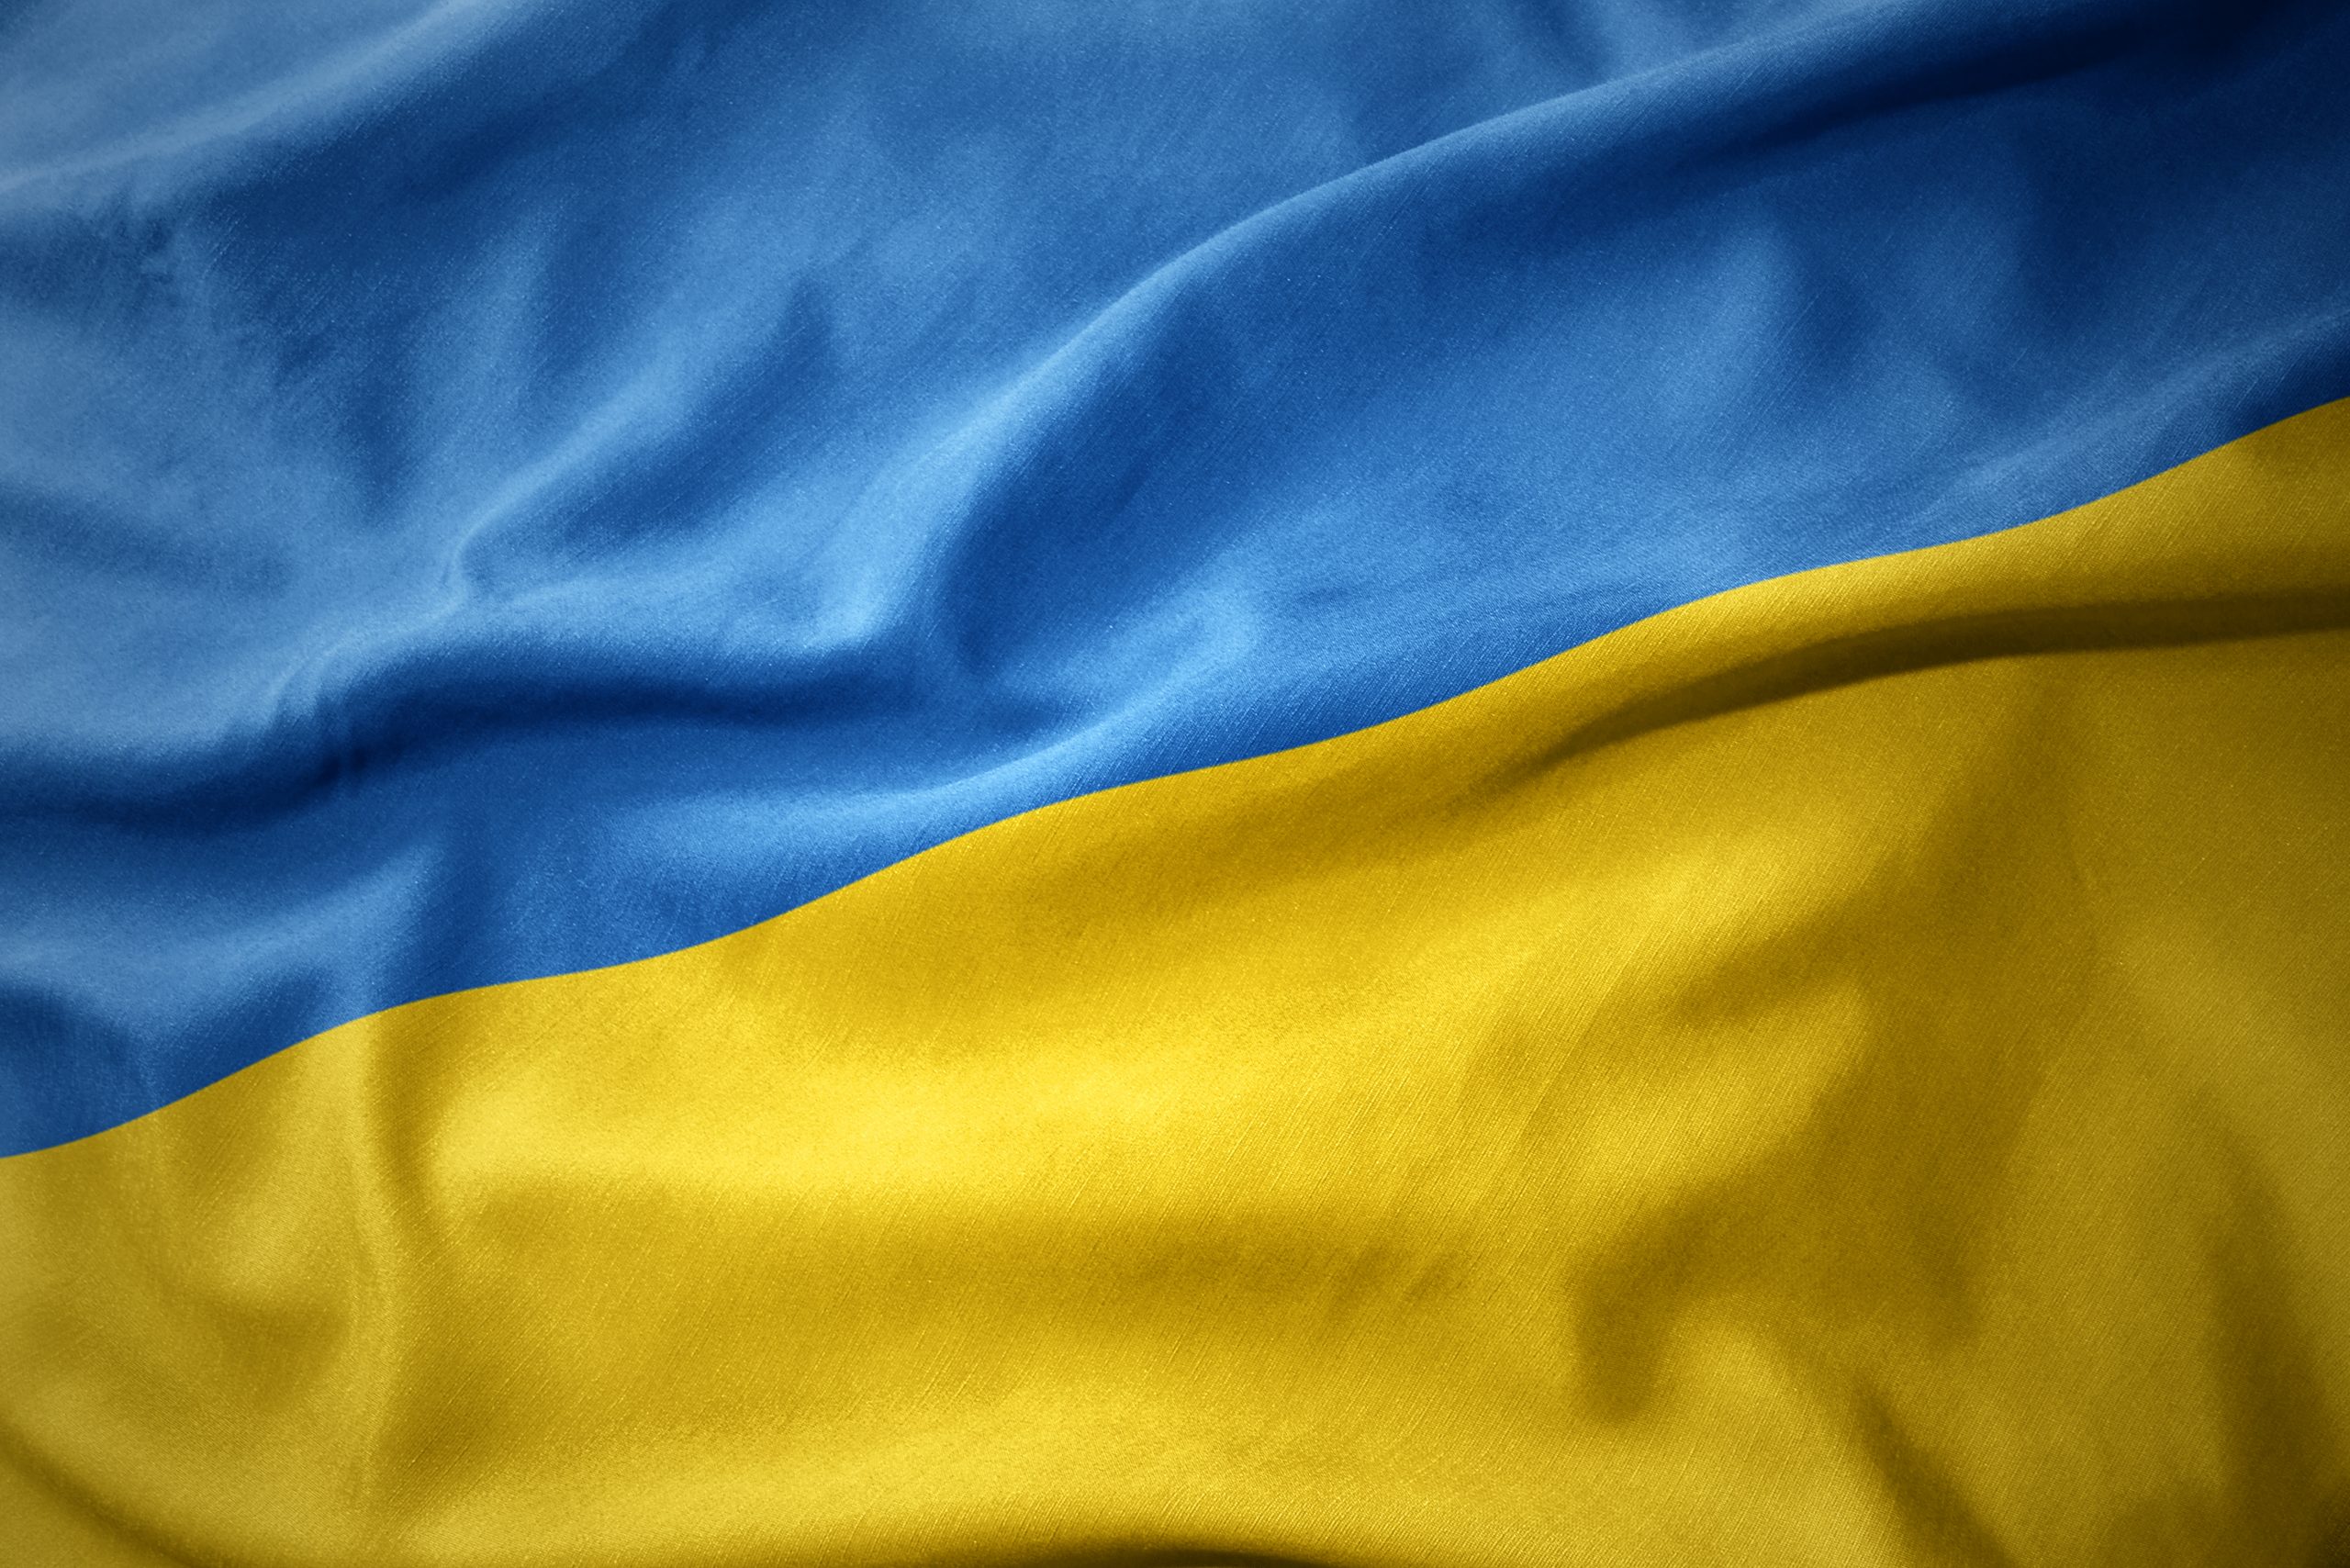 WYSE Travel Confederation statement on Ukraine